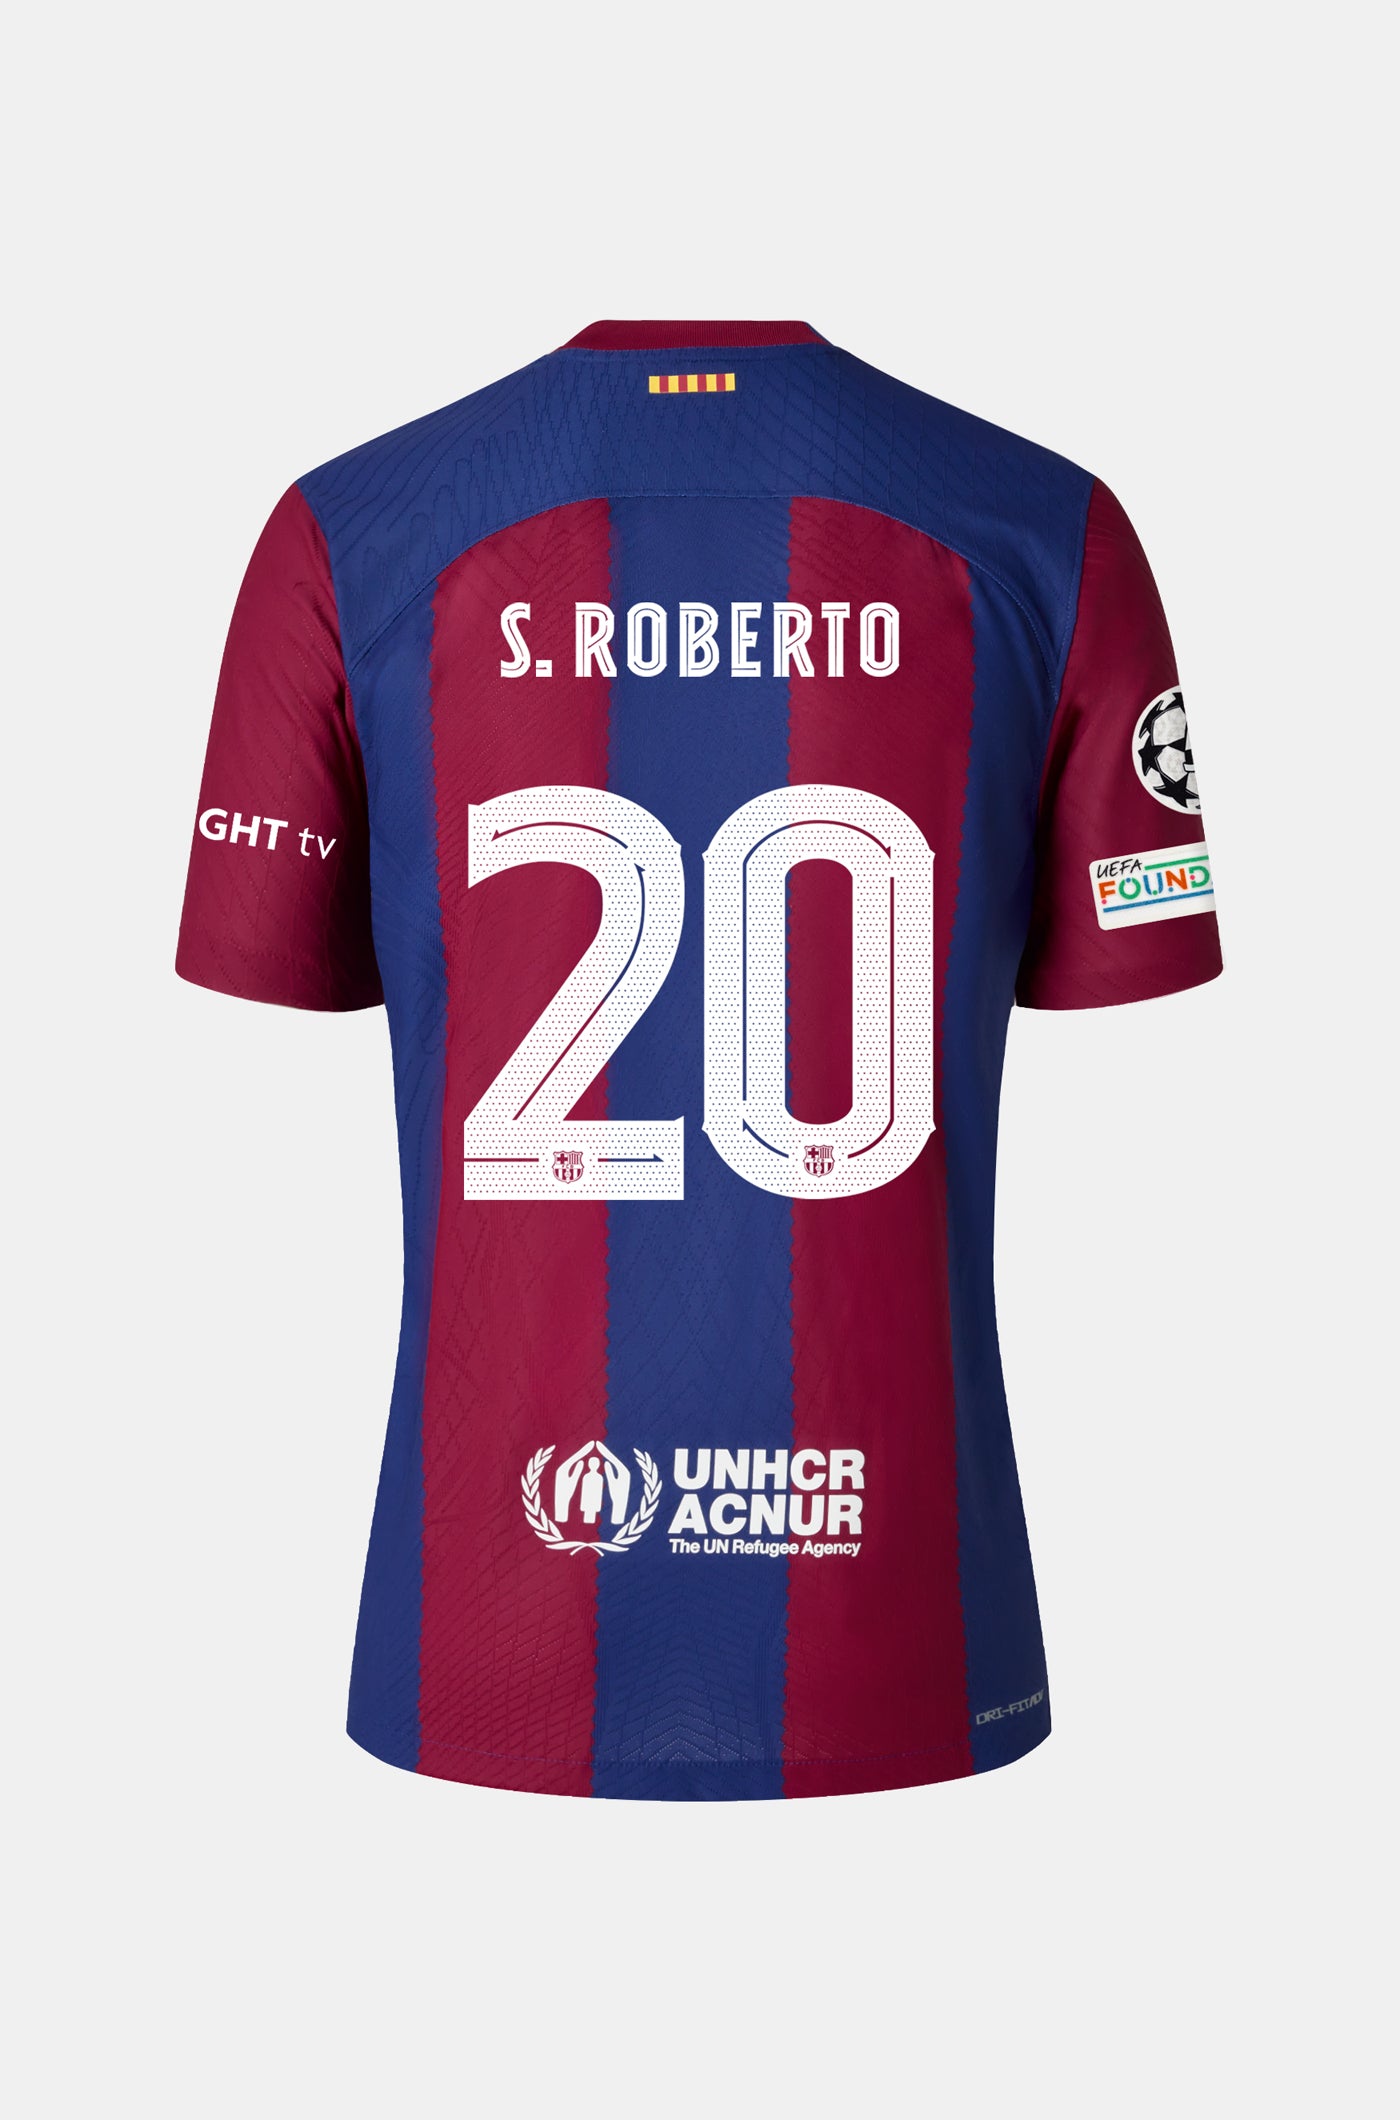 UCL FC Barcelona home shirt 23/24 - Junior - S. ROBERTO